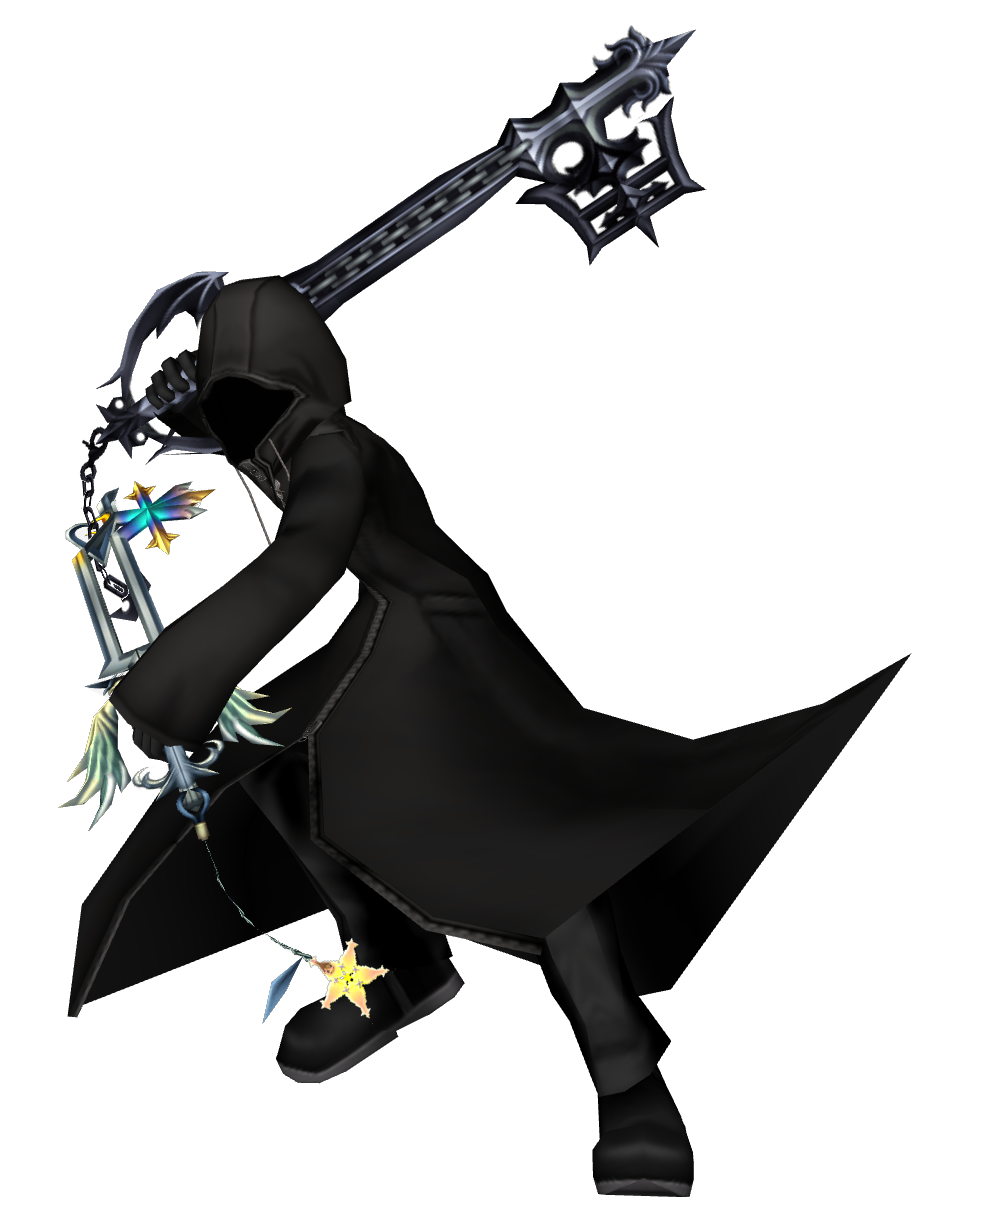 MMD DL] Roxas's Keyblade - Darker than Dark by makaihana975 on